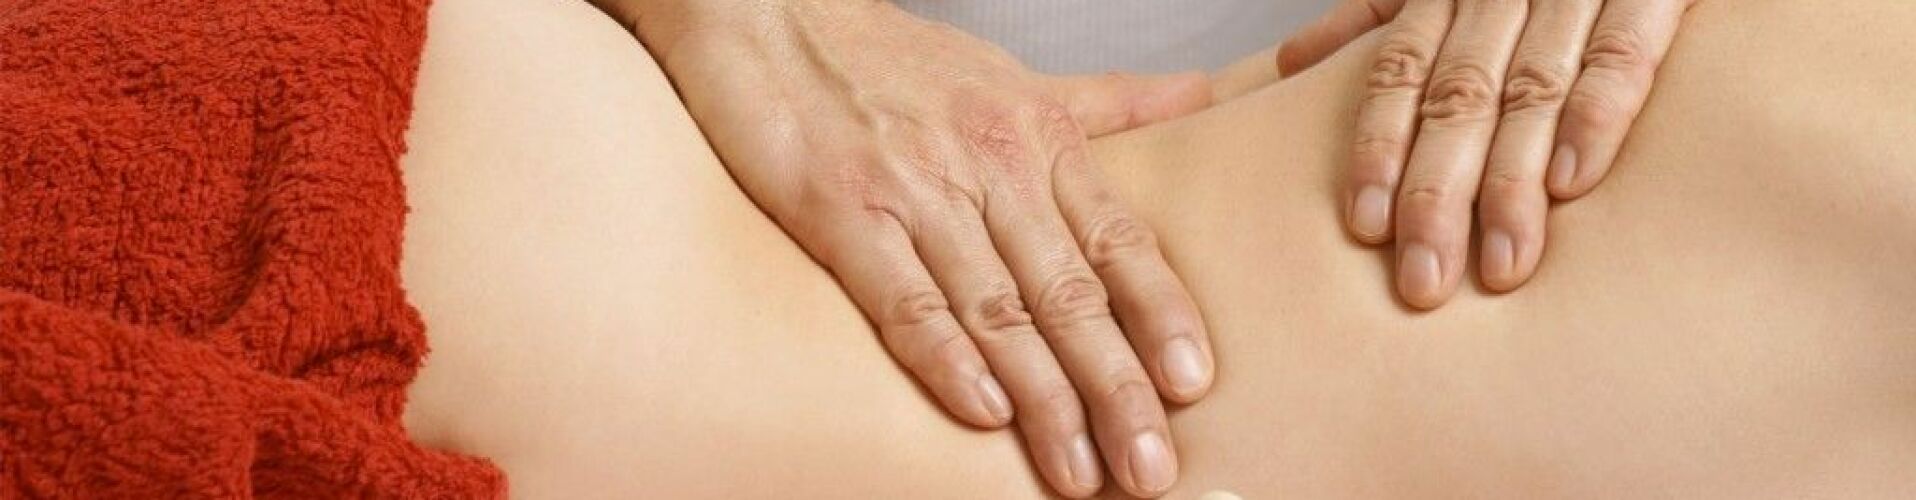 opleiding massagetherapeut